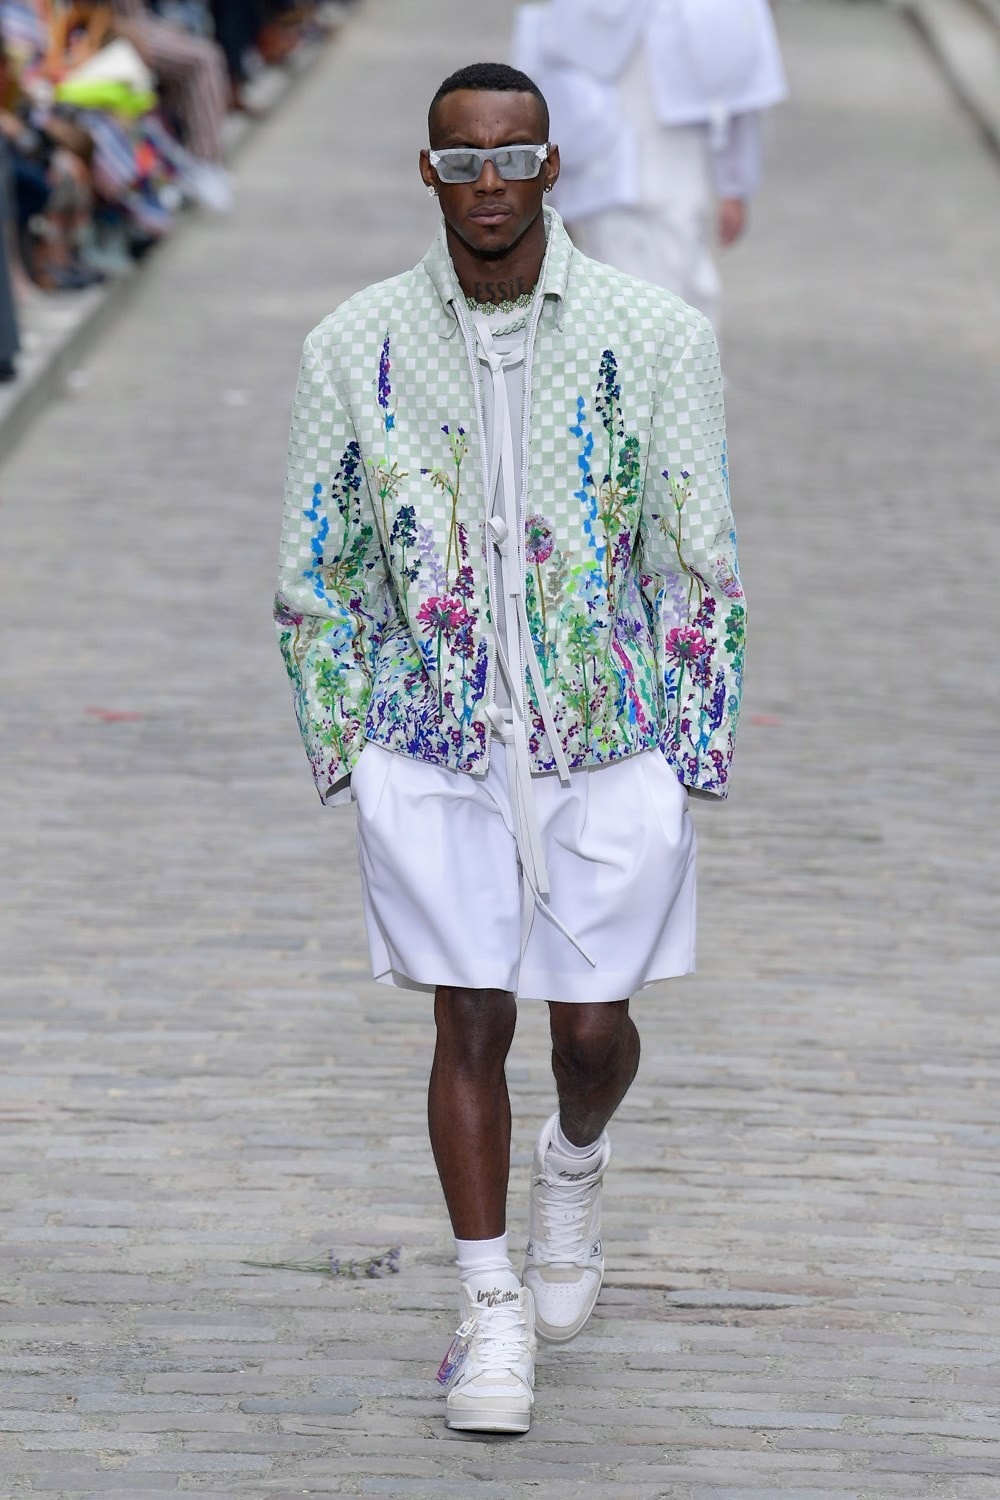 Louis Vuitton Virgil Abloh Spring Summer 2020 Paris Fashion Week Men's Show Collection Jacket Green Shorts White